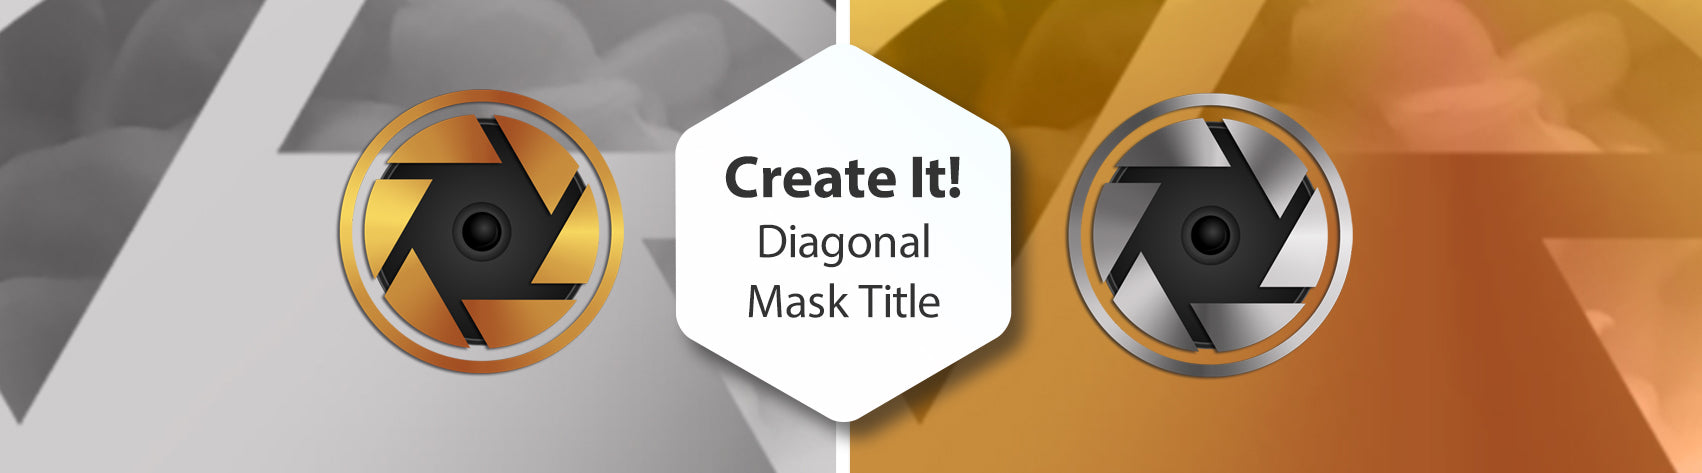 Create It! Diagonal Mask Title Slide